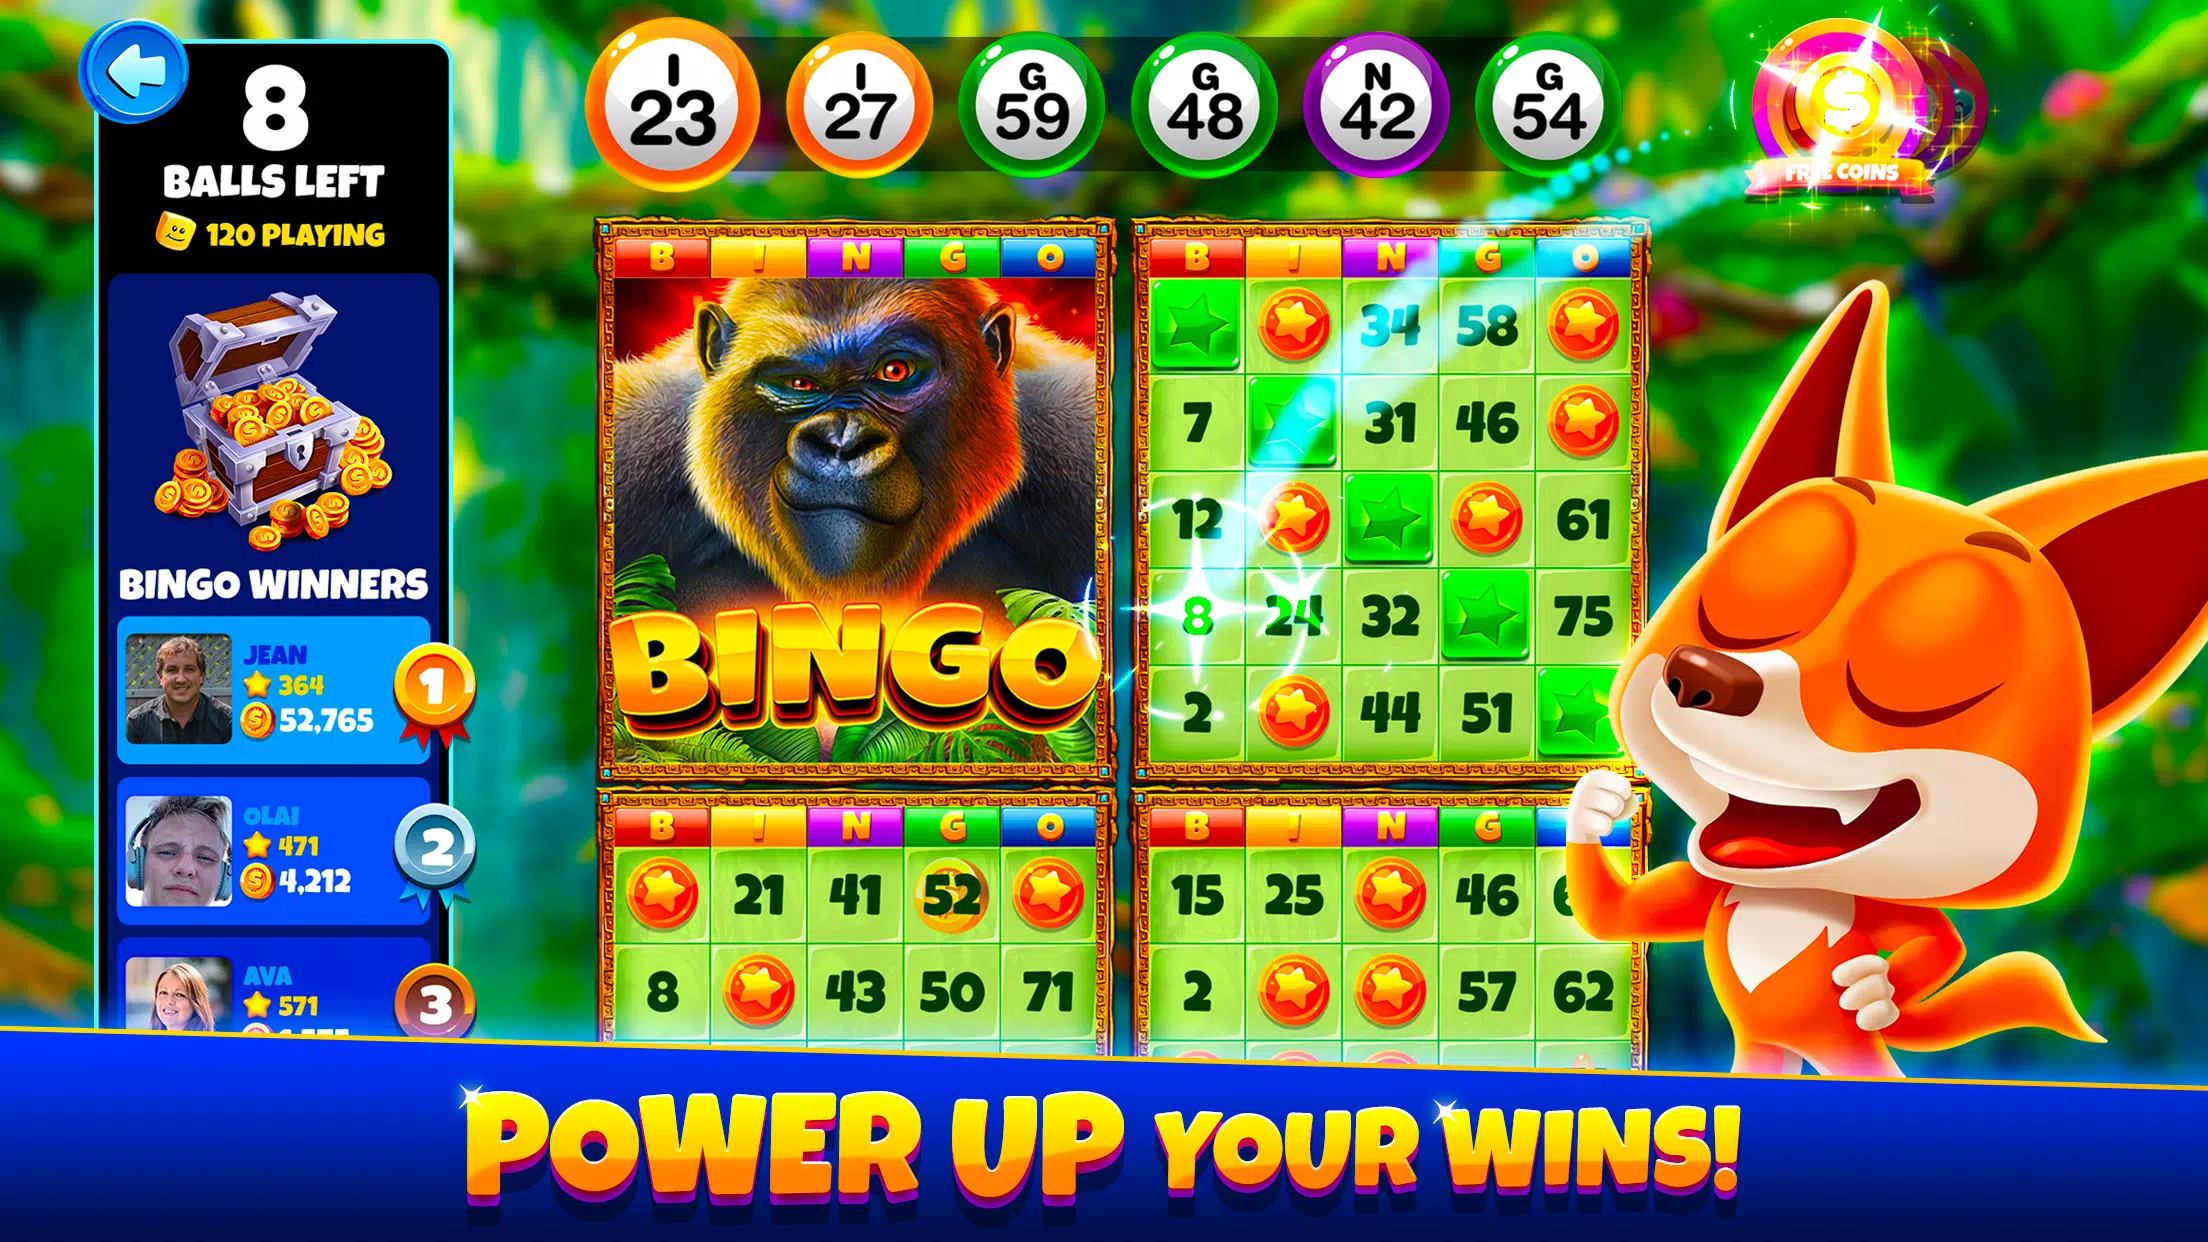 Bingo Rider - Casino Game APK 6.0.3 for Android – Download Bingo